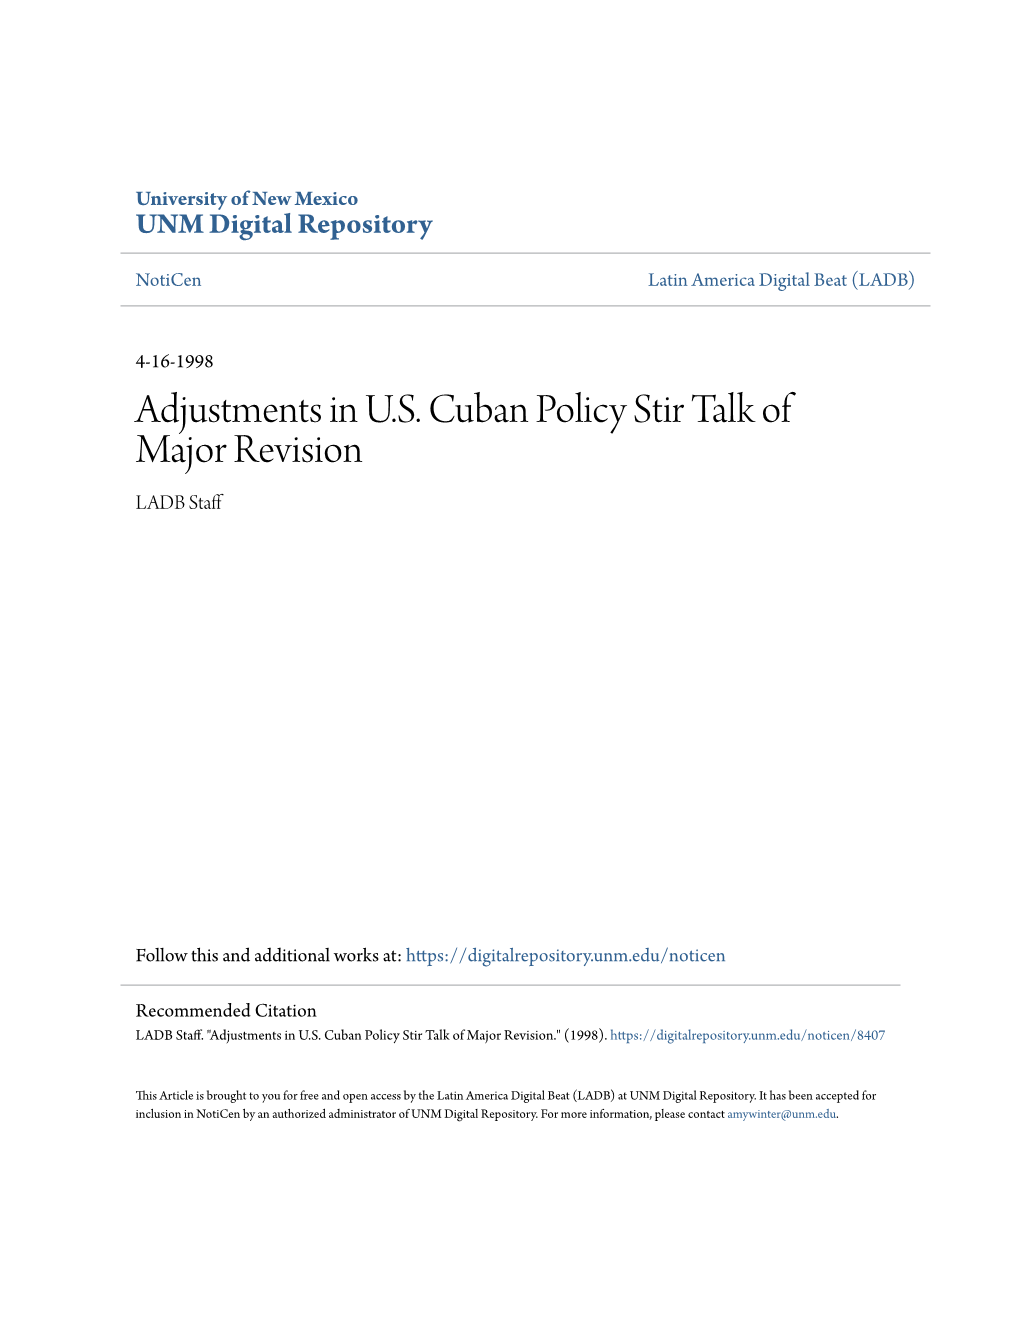 Adjustments in U.S. Cuban Policy Stir Talk of Major Revision LADB Staff